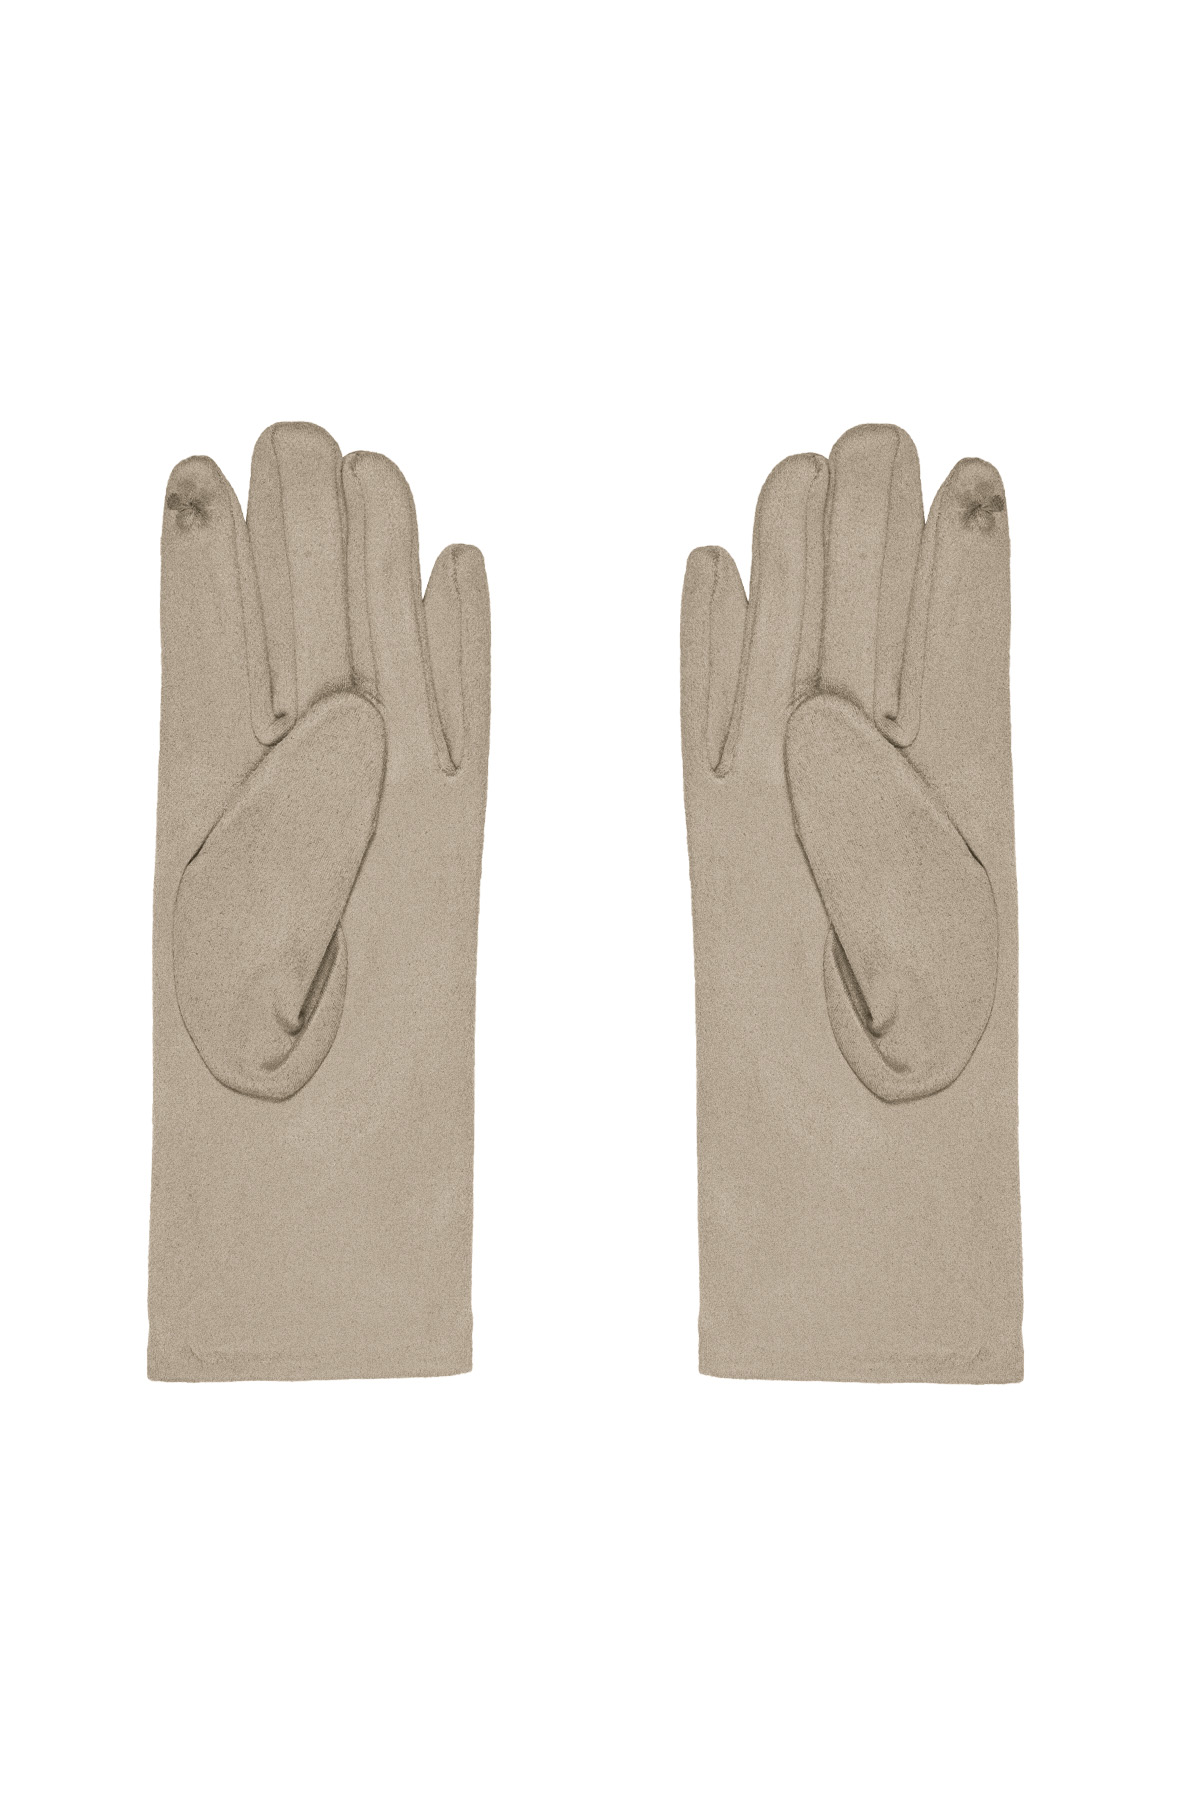 Gloves stones - beige h5 Picture3